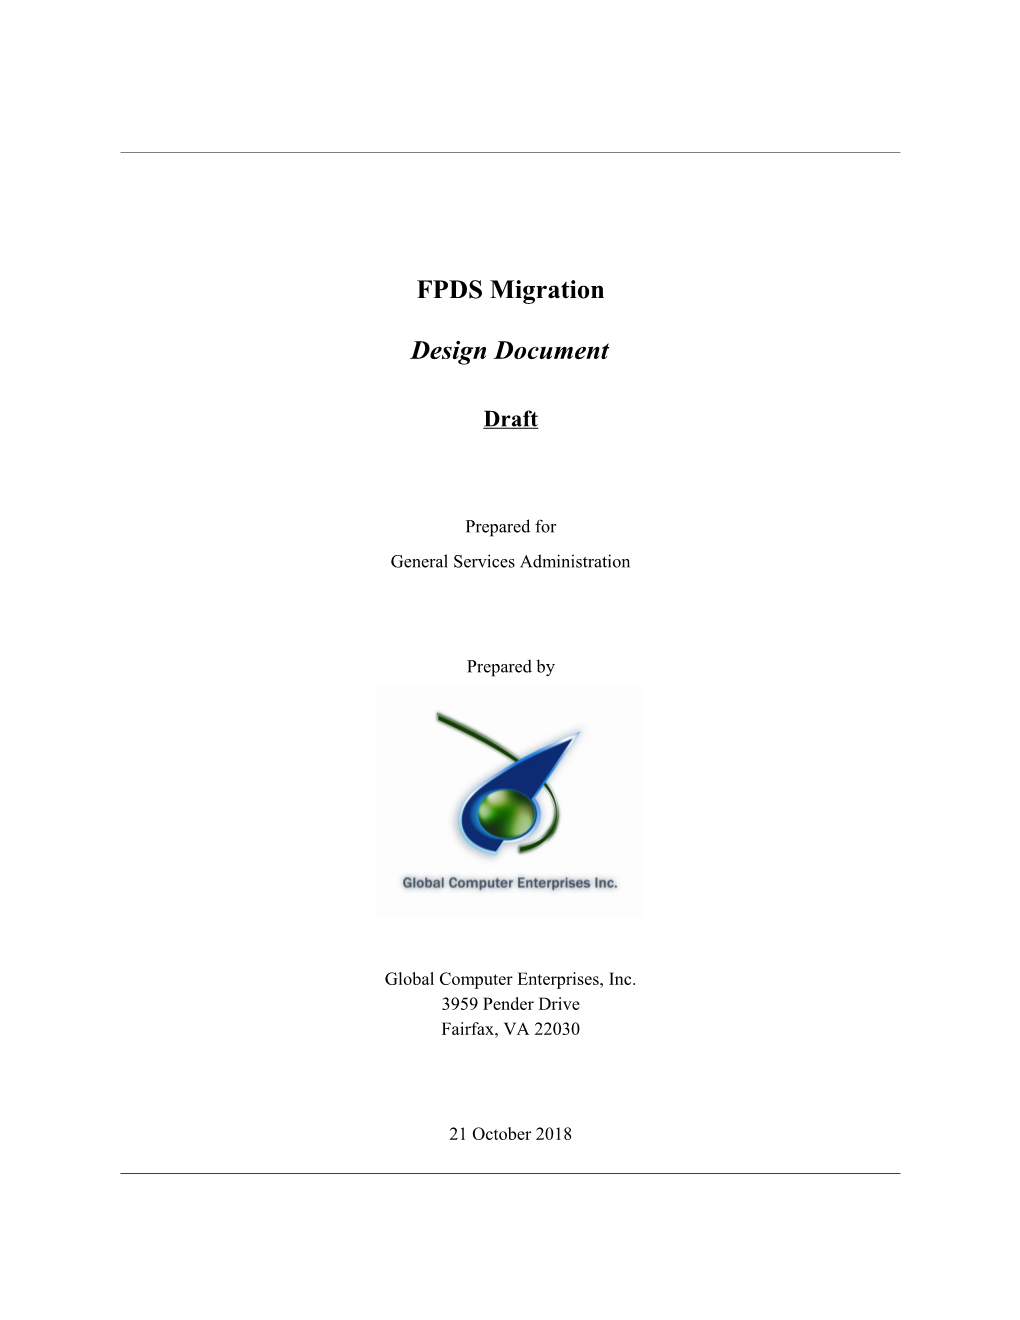 FPDS Migration Design Document